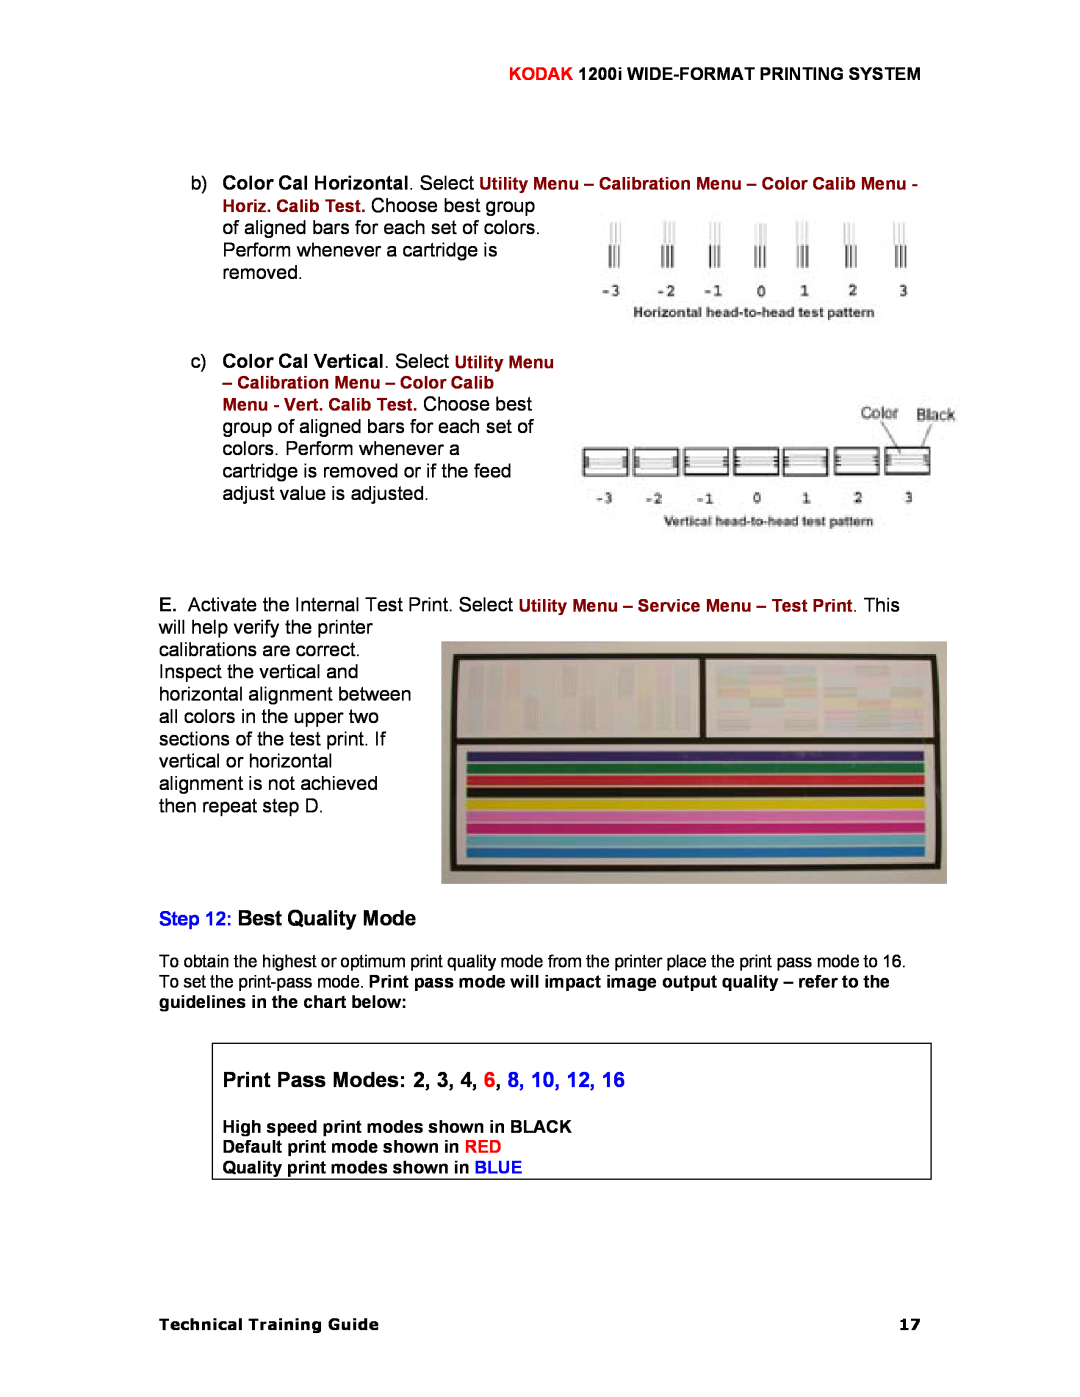 Kodak 1200I manual Best Quality Mode, Print Pass Modes: 2, 3, 4, 6, 8, 10, 12, cColor Cal Vertical. Select Utility Menu 